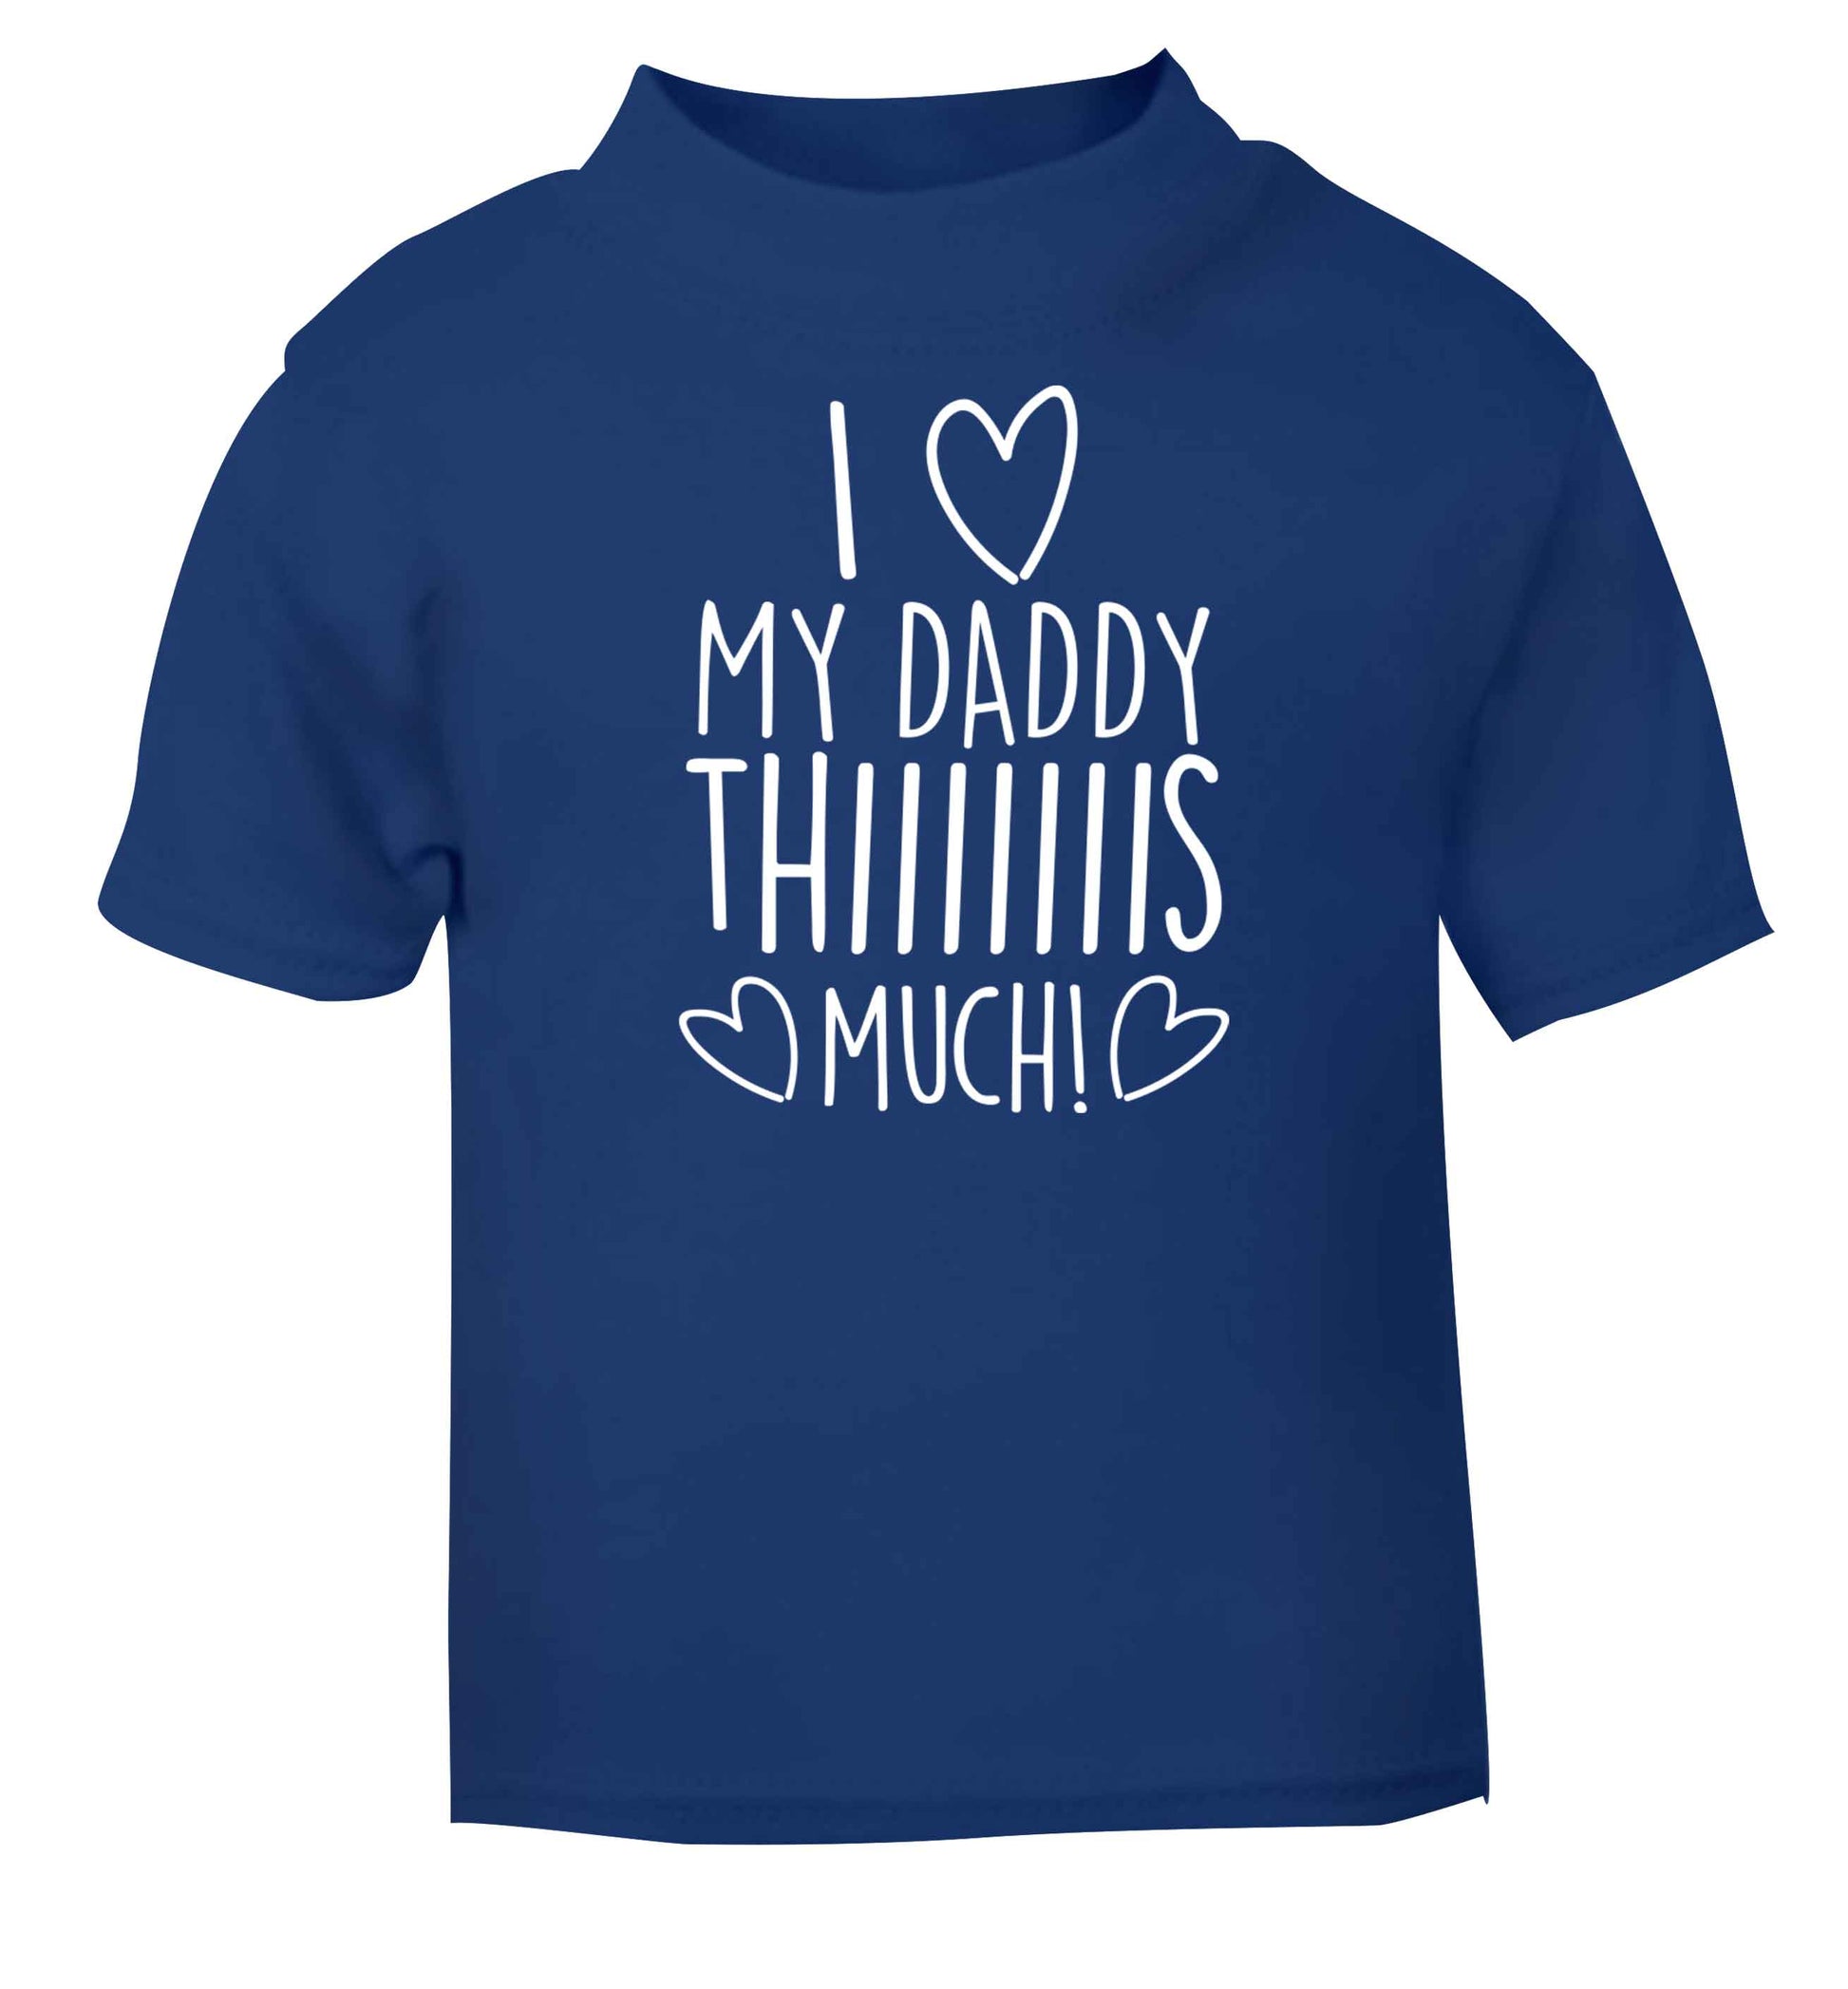 I love my daddy thiiiiis much! blue baby toddler Tshirt 2 Years